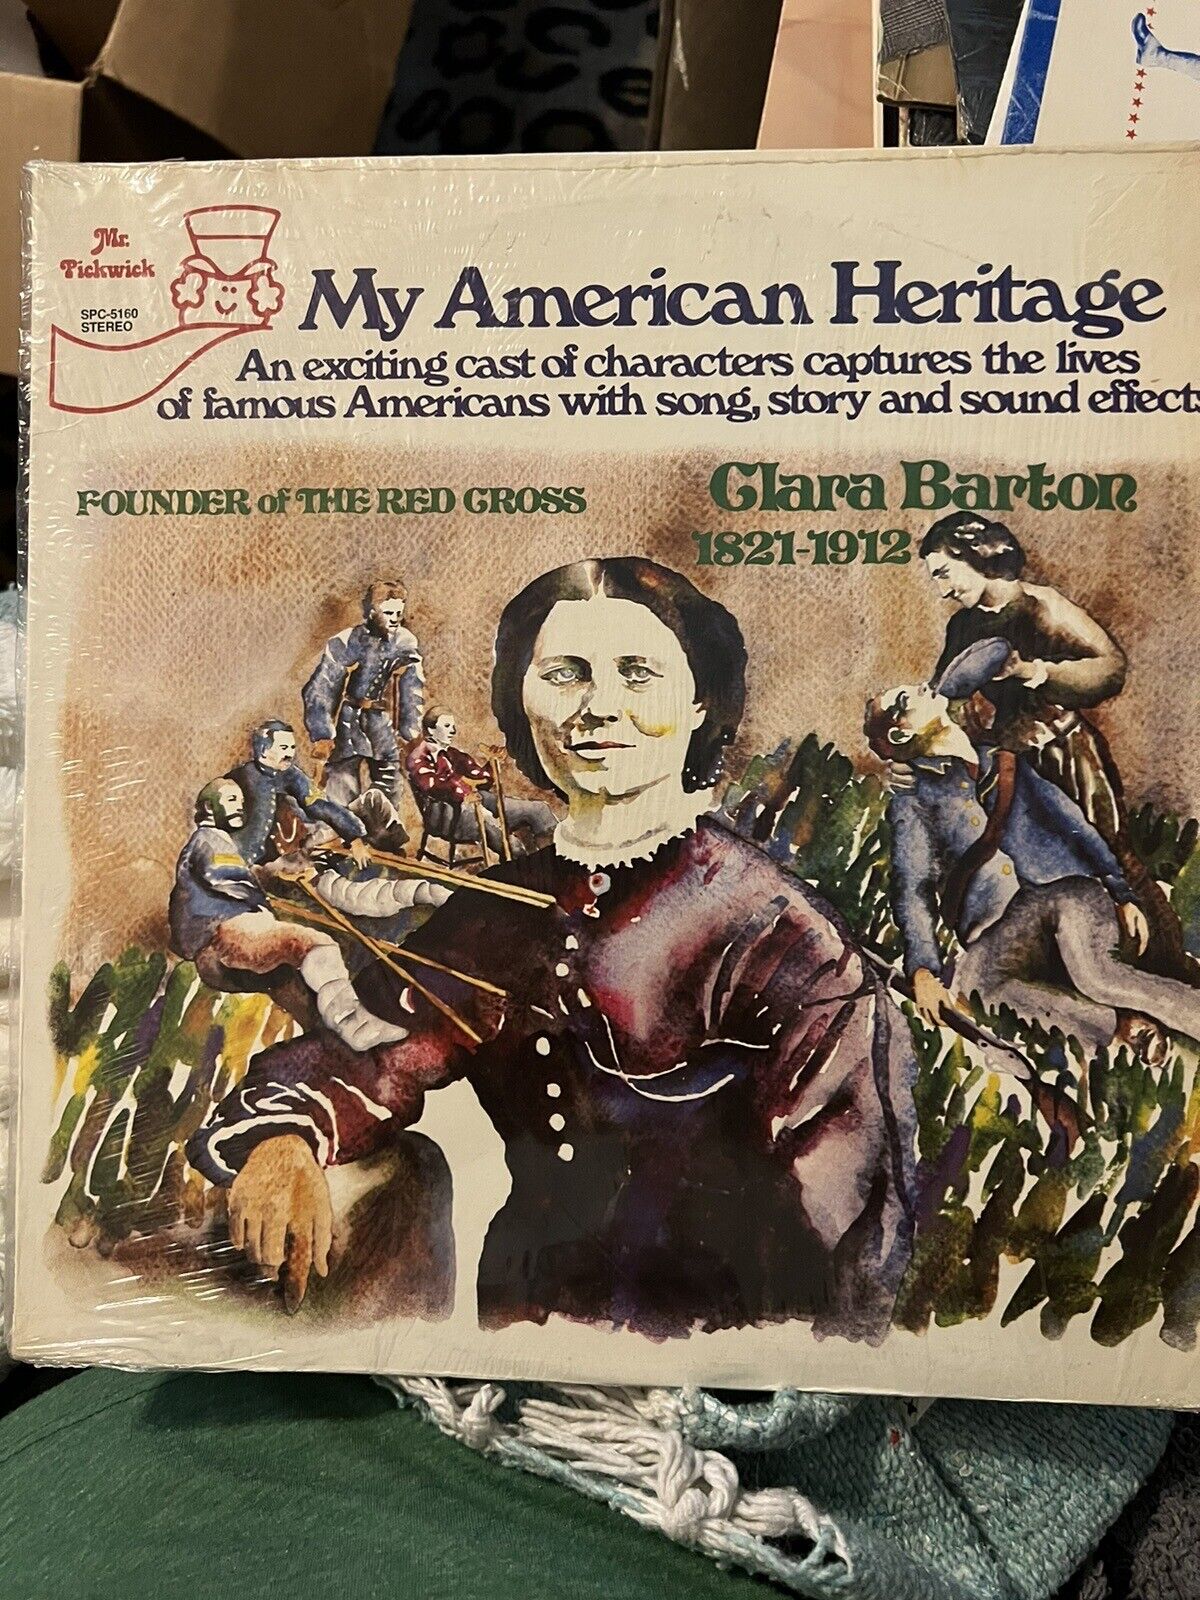 Vintage Mr. Pickwick “My American Heritage/ Clara Barton” Album